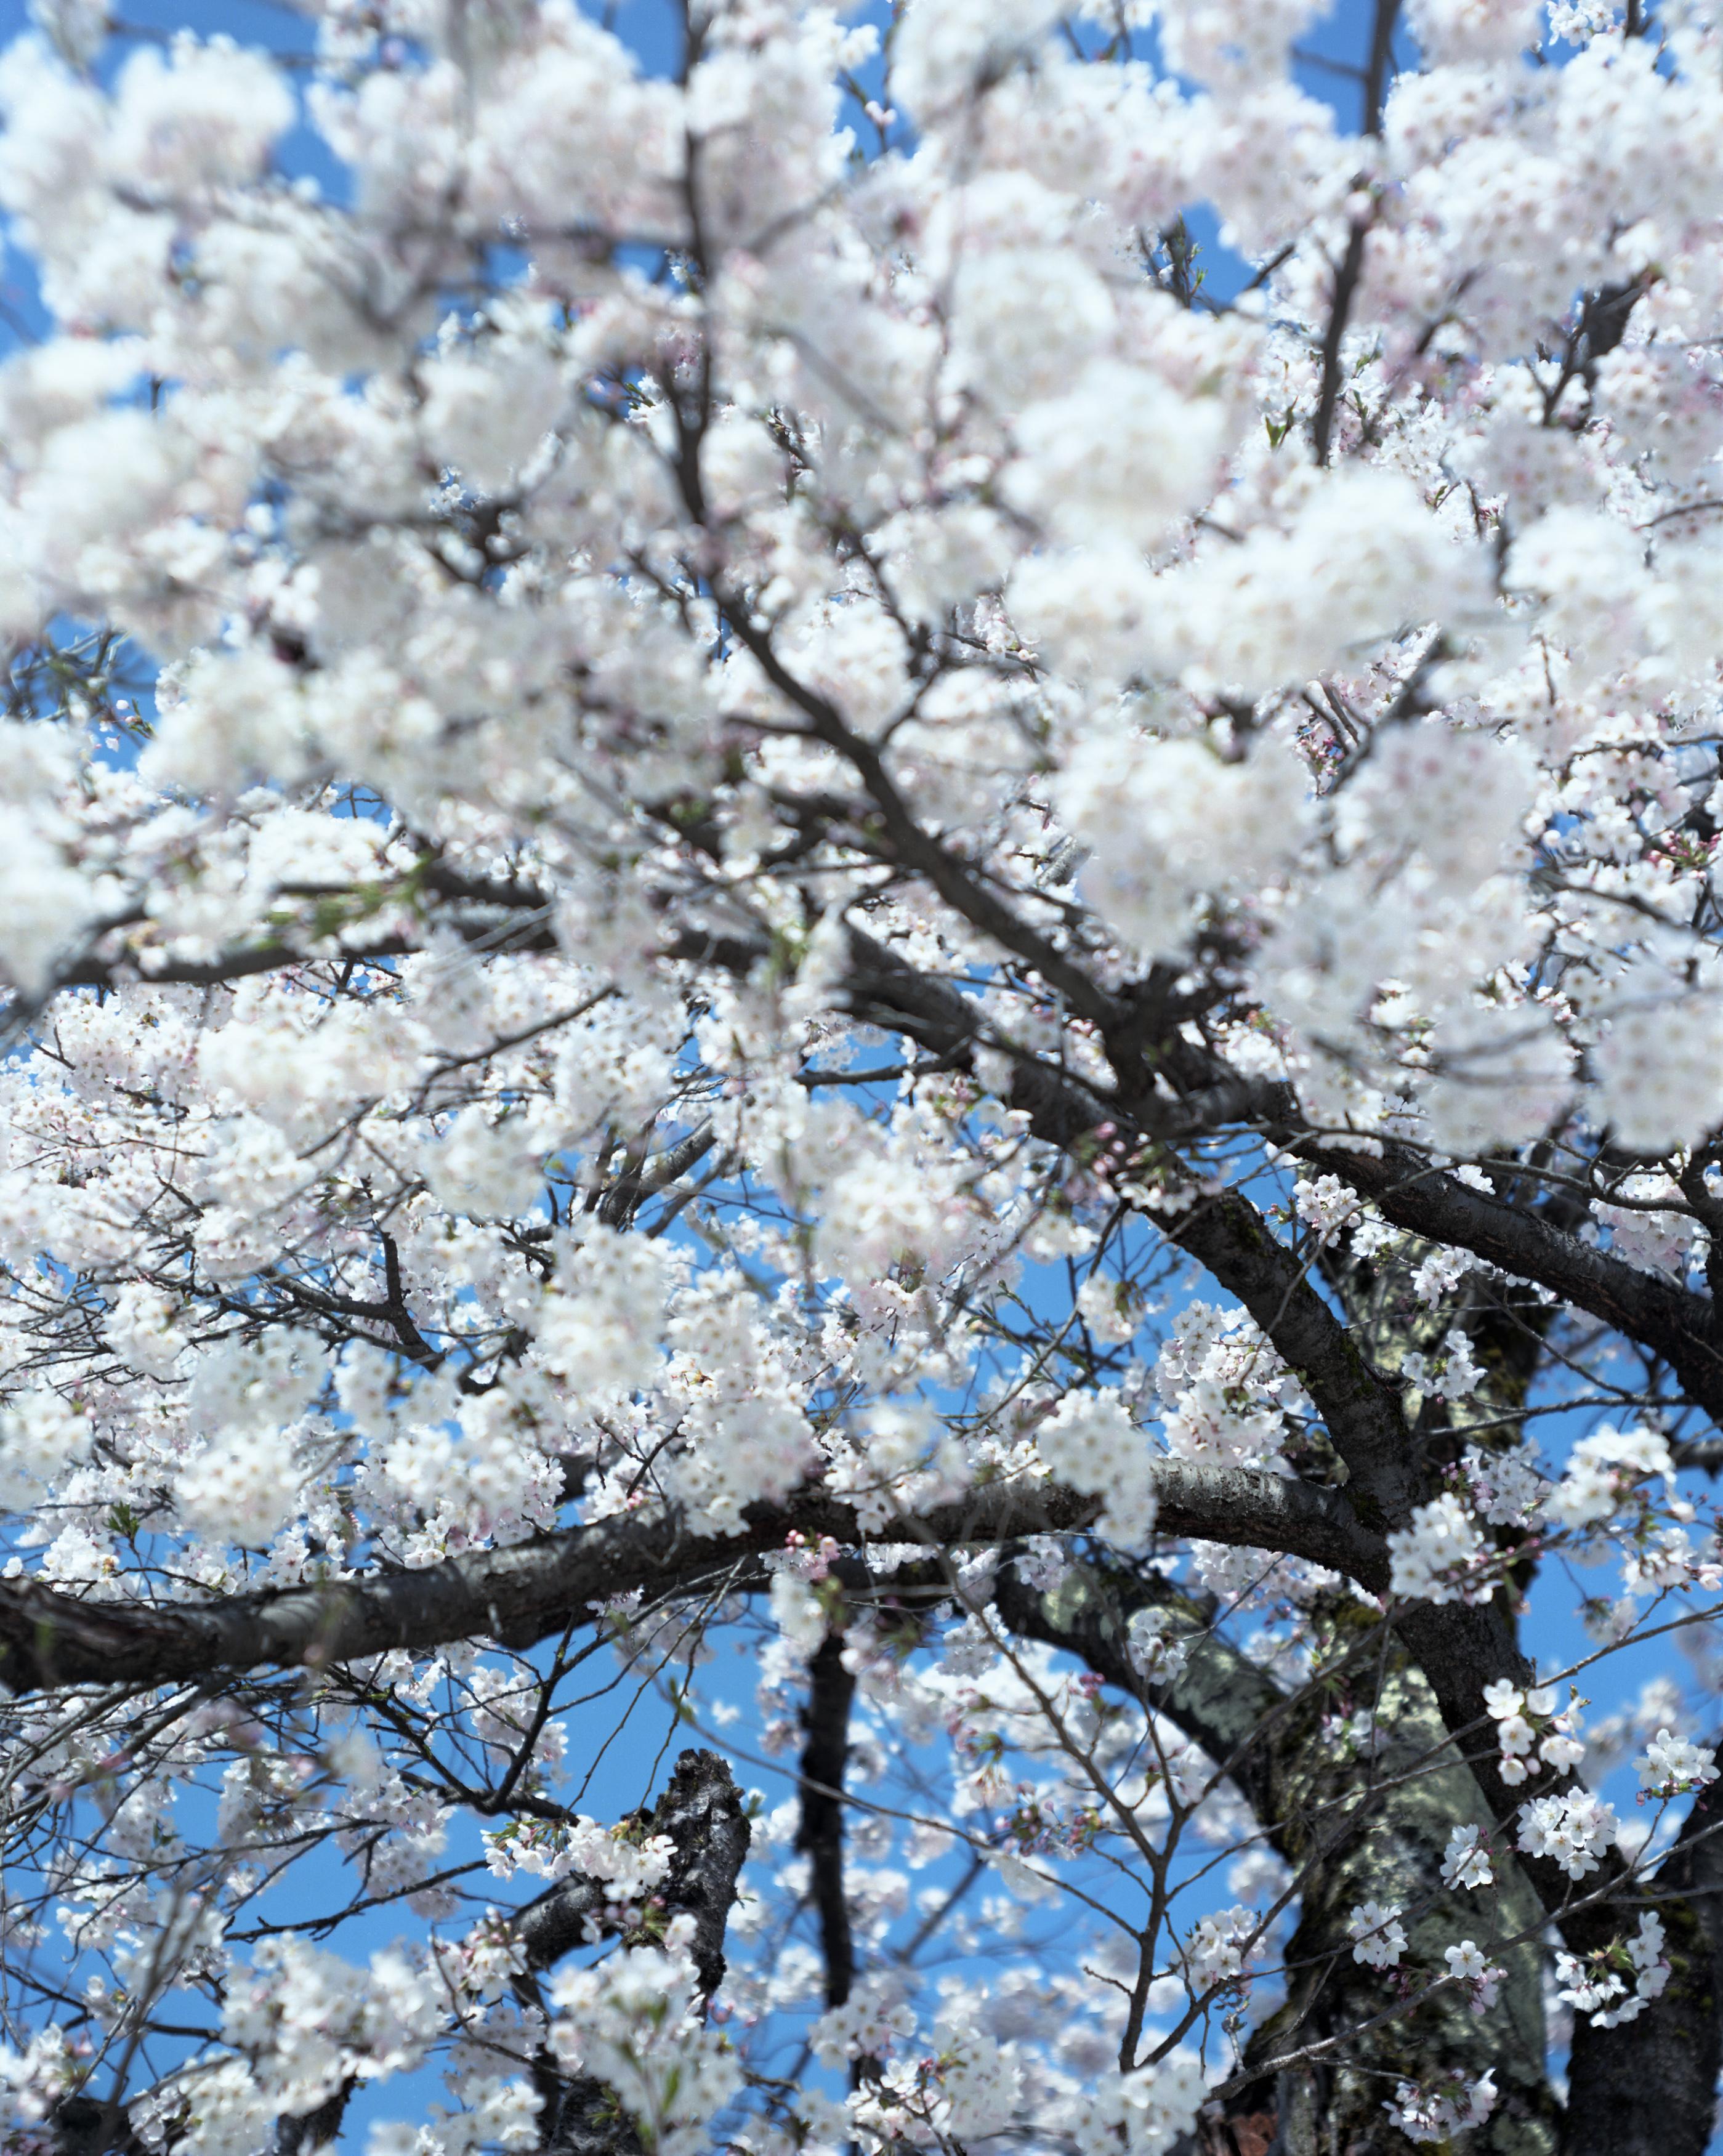 RISAKU SUZUKI (*1963, Japan)
SAKURA 15,4-66
2015
Chromogenic print
Sheet 75 x 60 cm (29 1/2 x 23 5/8 in.)
Edition of 10; Ed. no. 3/10
Framed

The Sakura (Japanese term for ‘cherry blossoms’) Celebration commences in early spring and has inspired